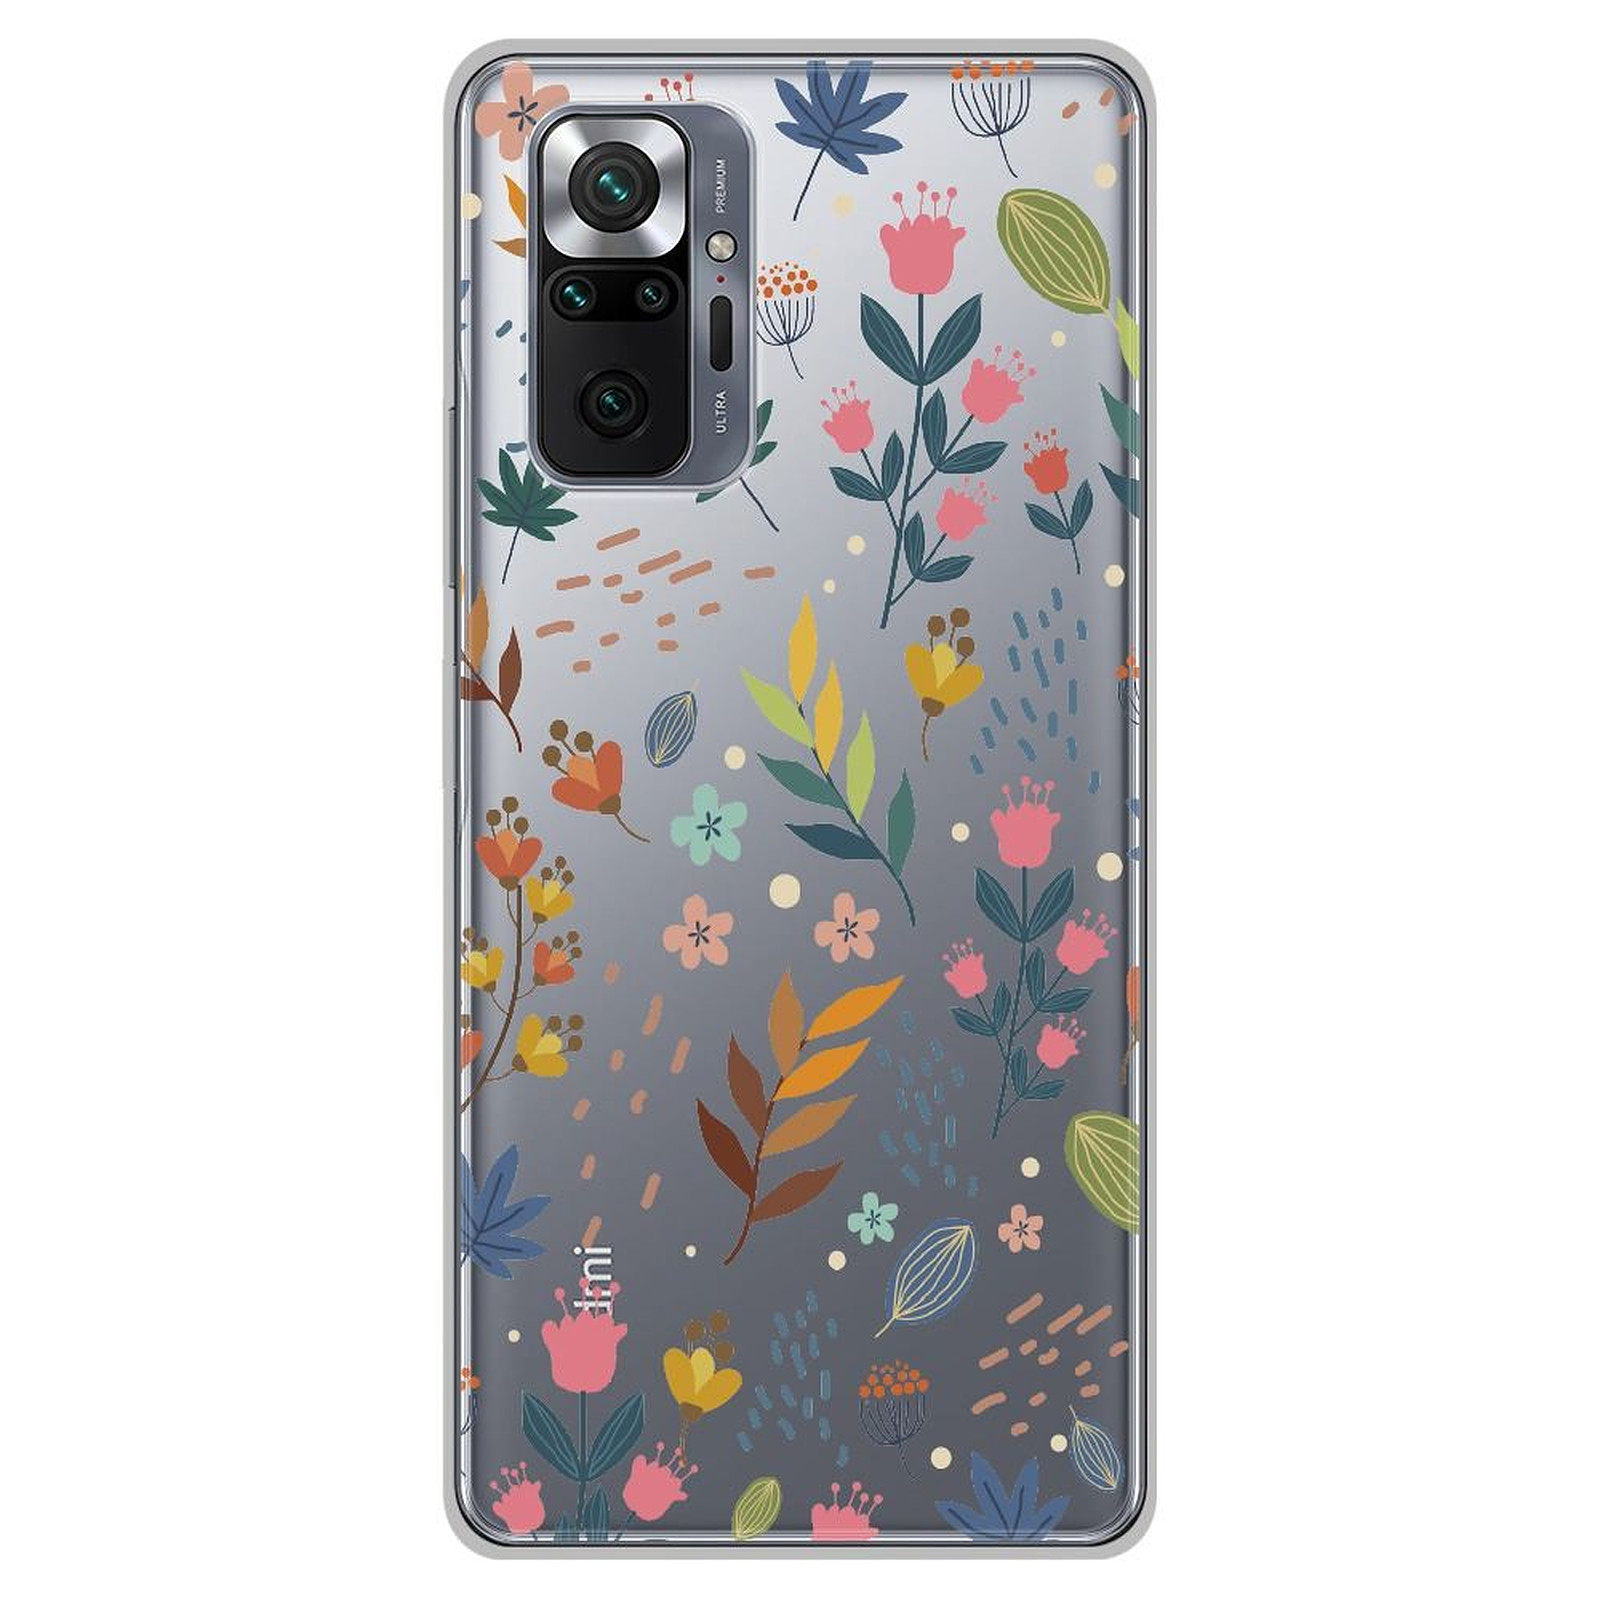 1001 Coques Coque silicone gel Xiaomi Redmi Note 10 Pro motif Fleurs colorees - Coque telephone 1001Coques